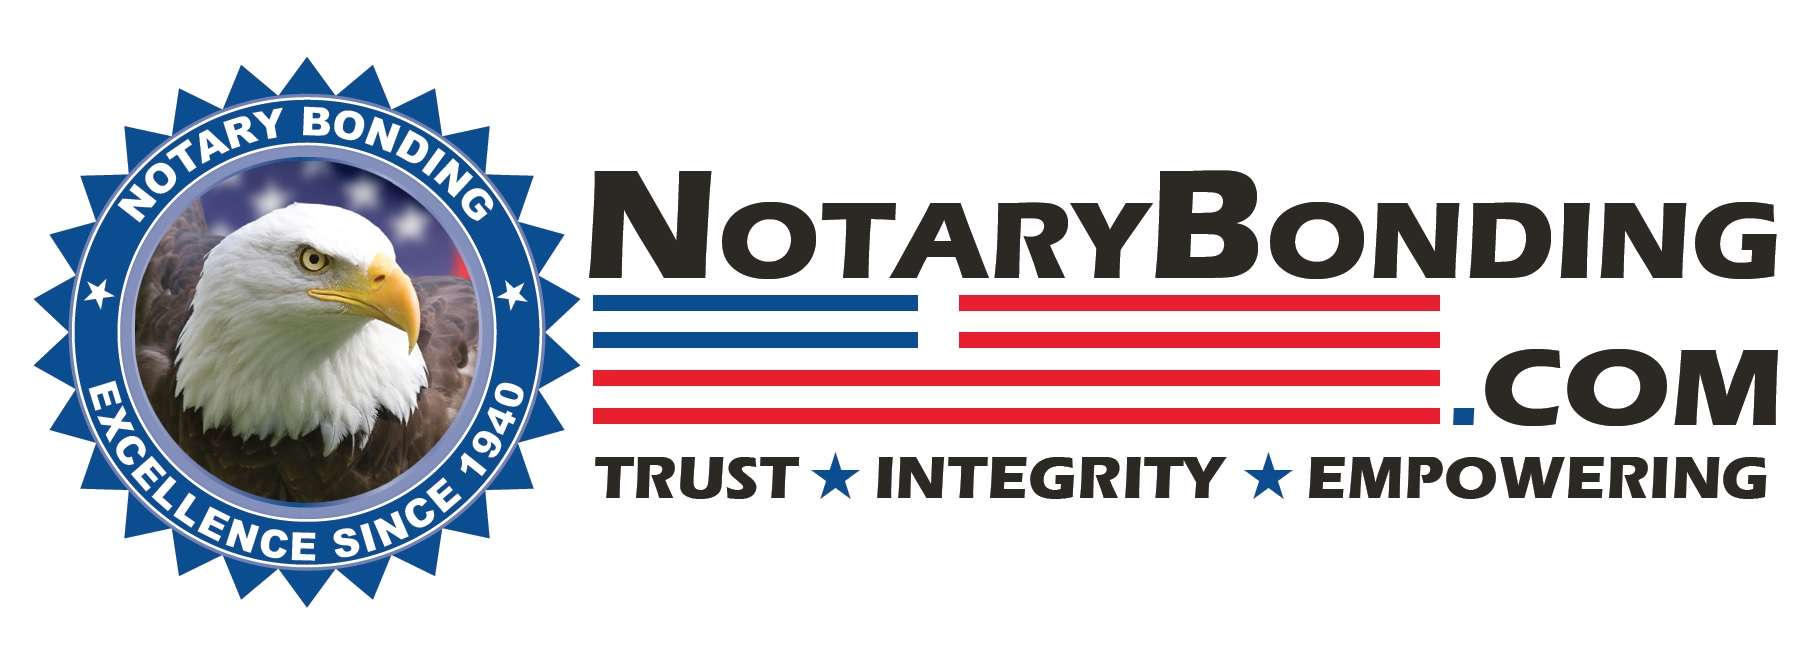 Notary Service and Bonding Agency, Inc. Logo